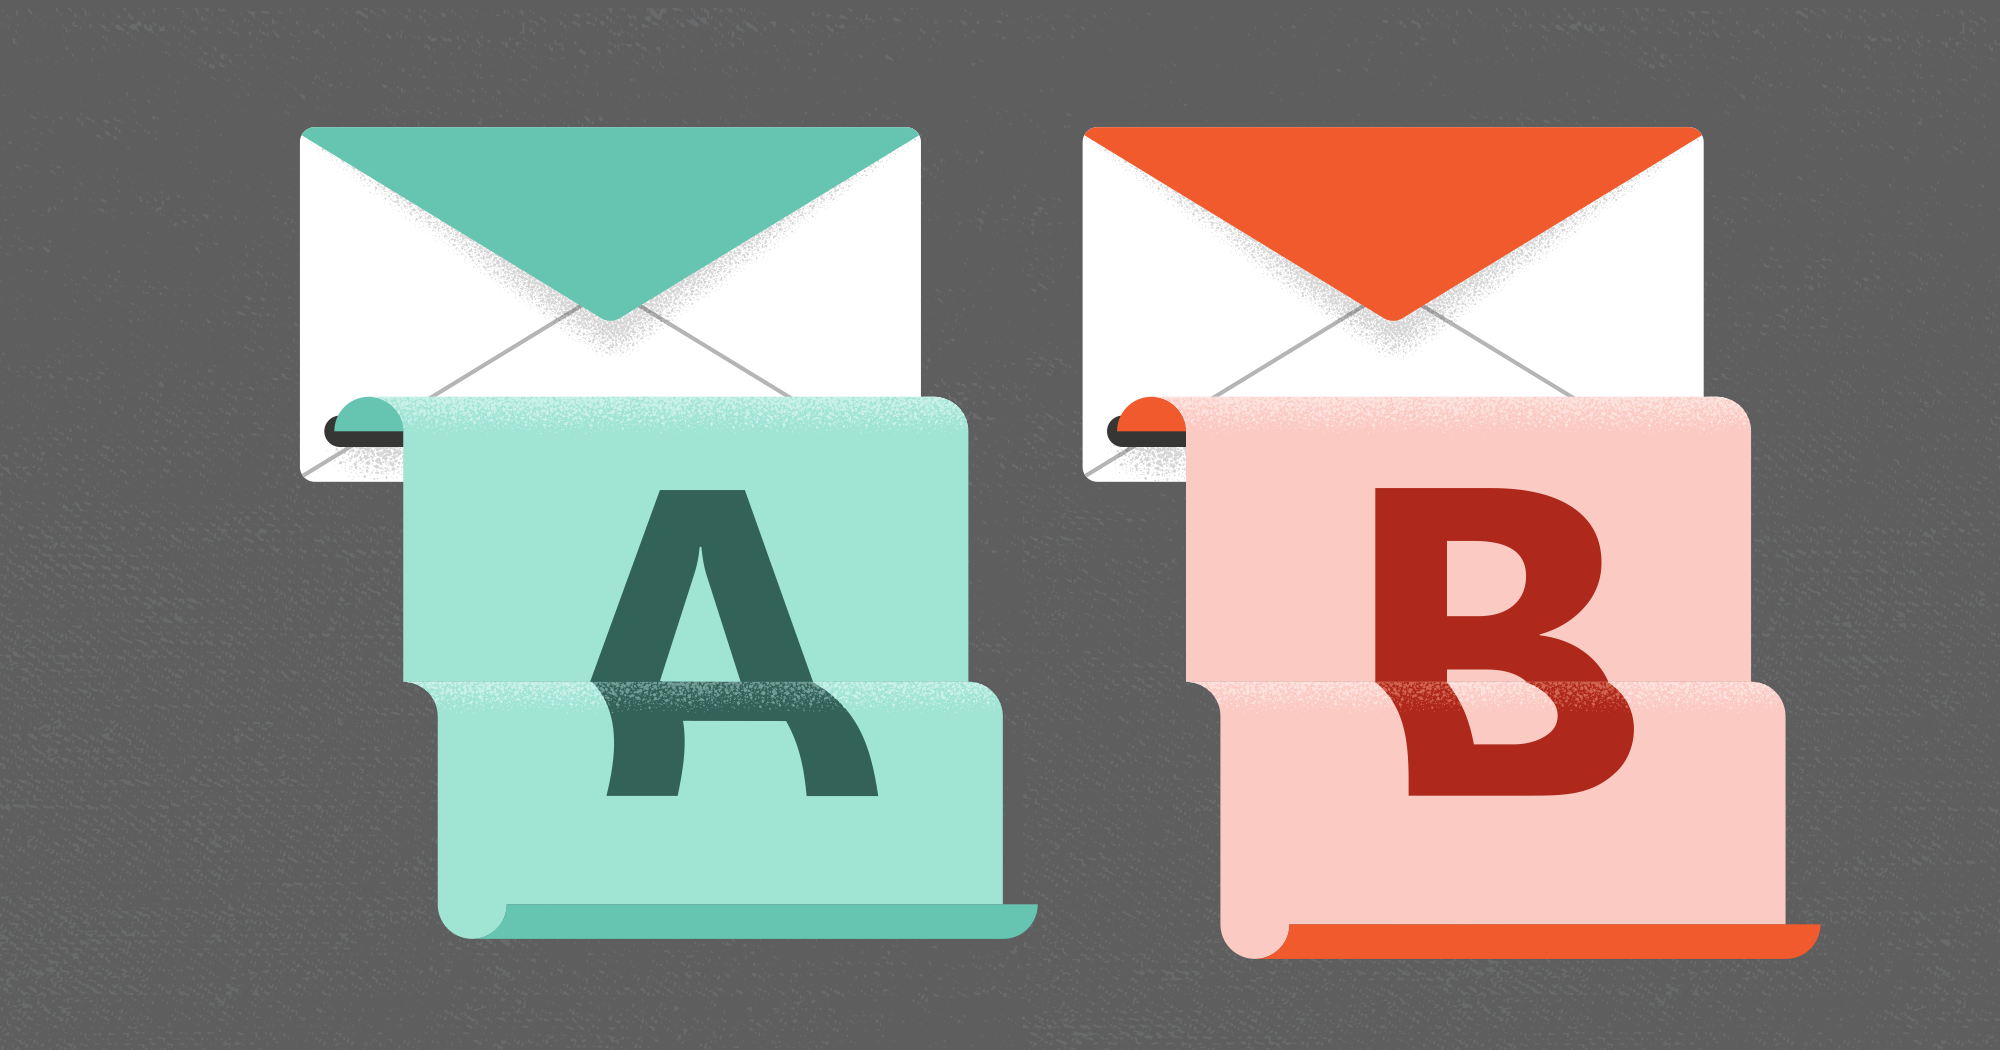 A/B testing emails